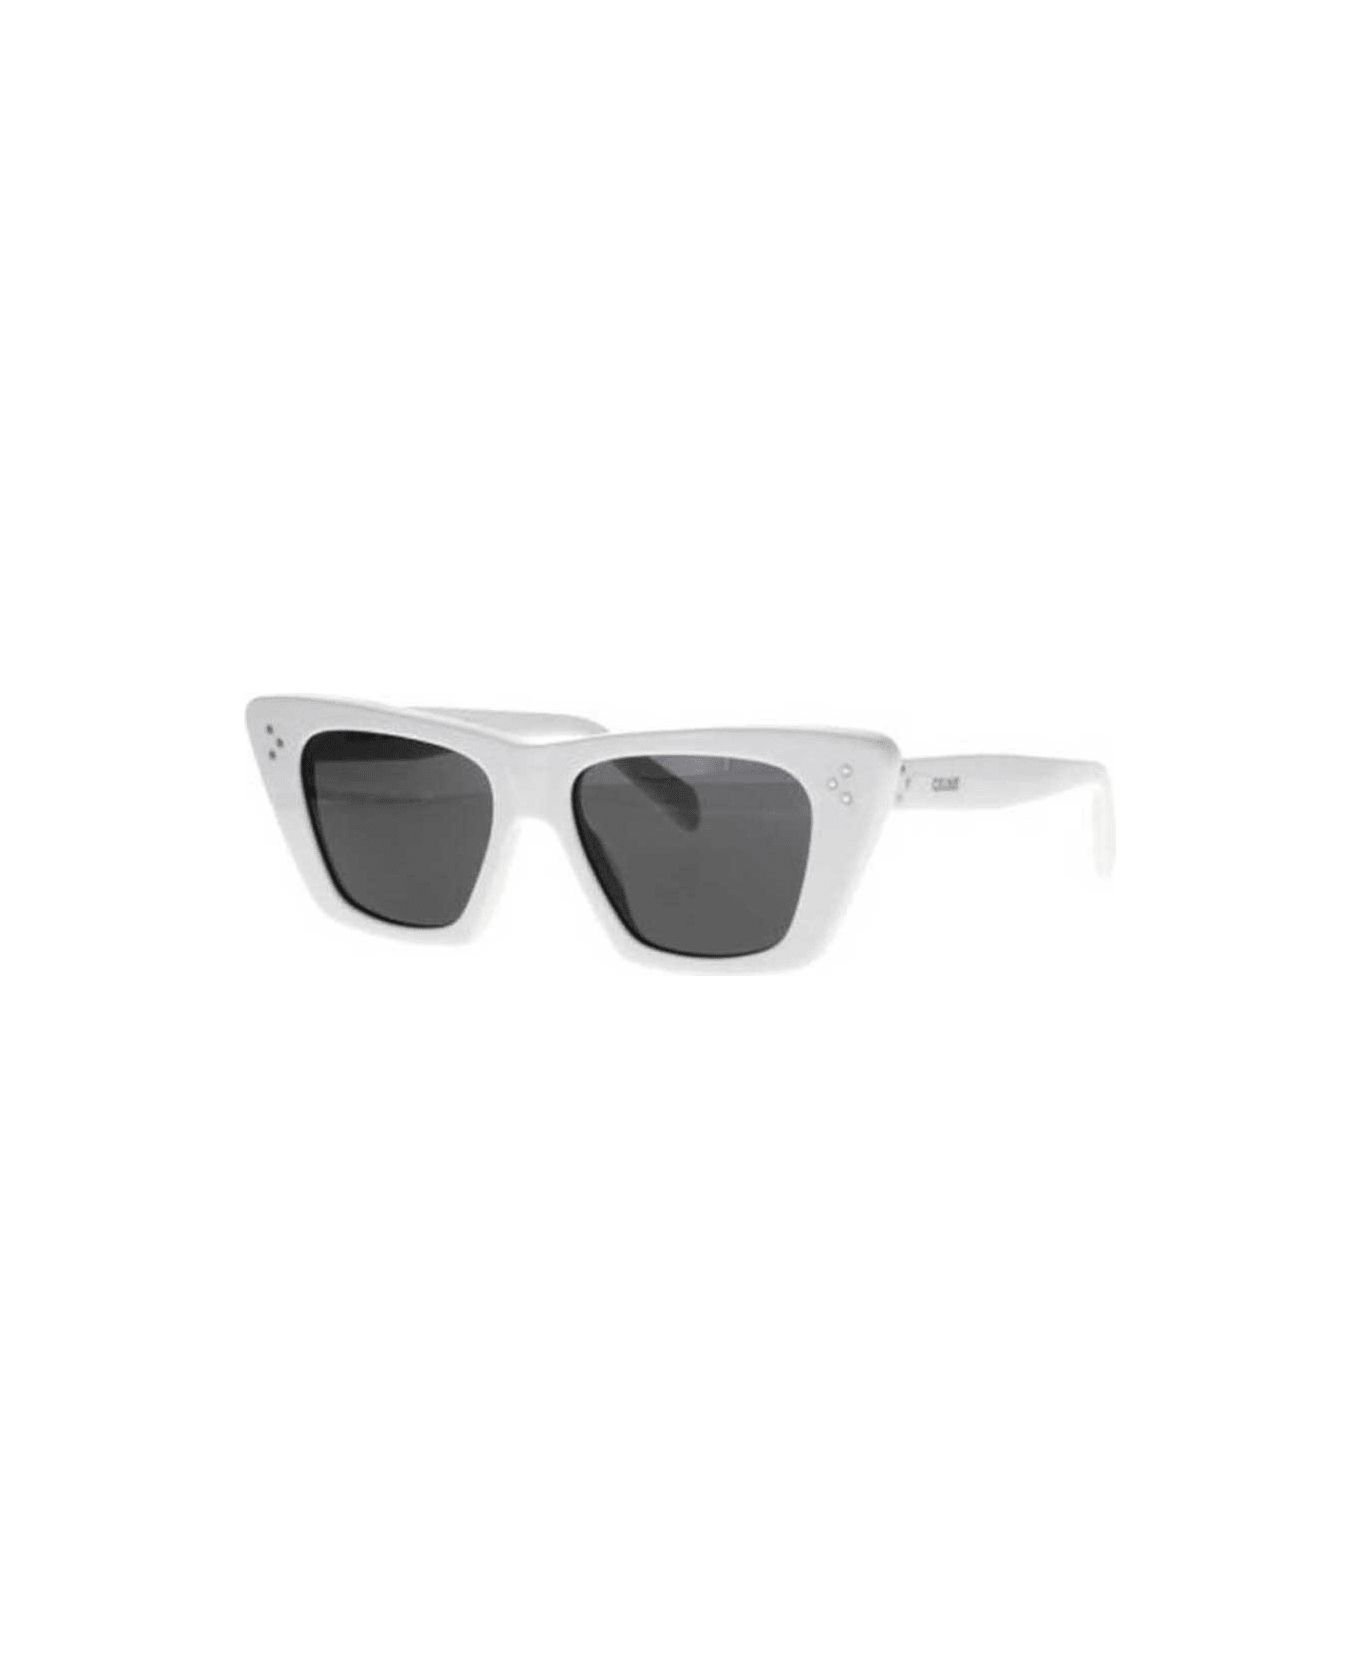 Celine Sunglasses - Bianco/Grigio サングラス